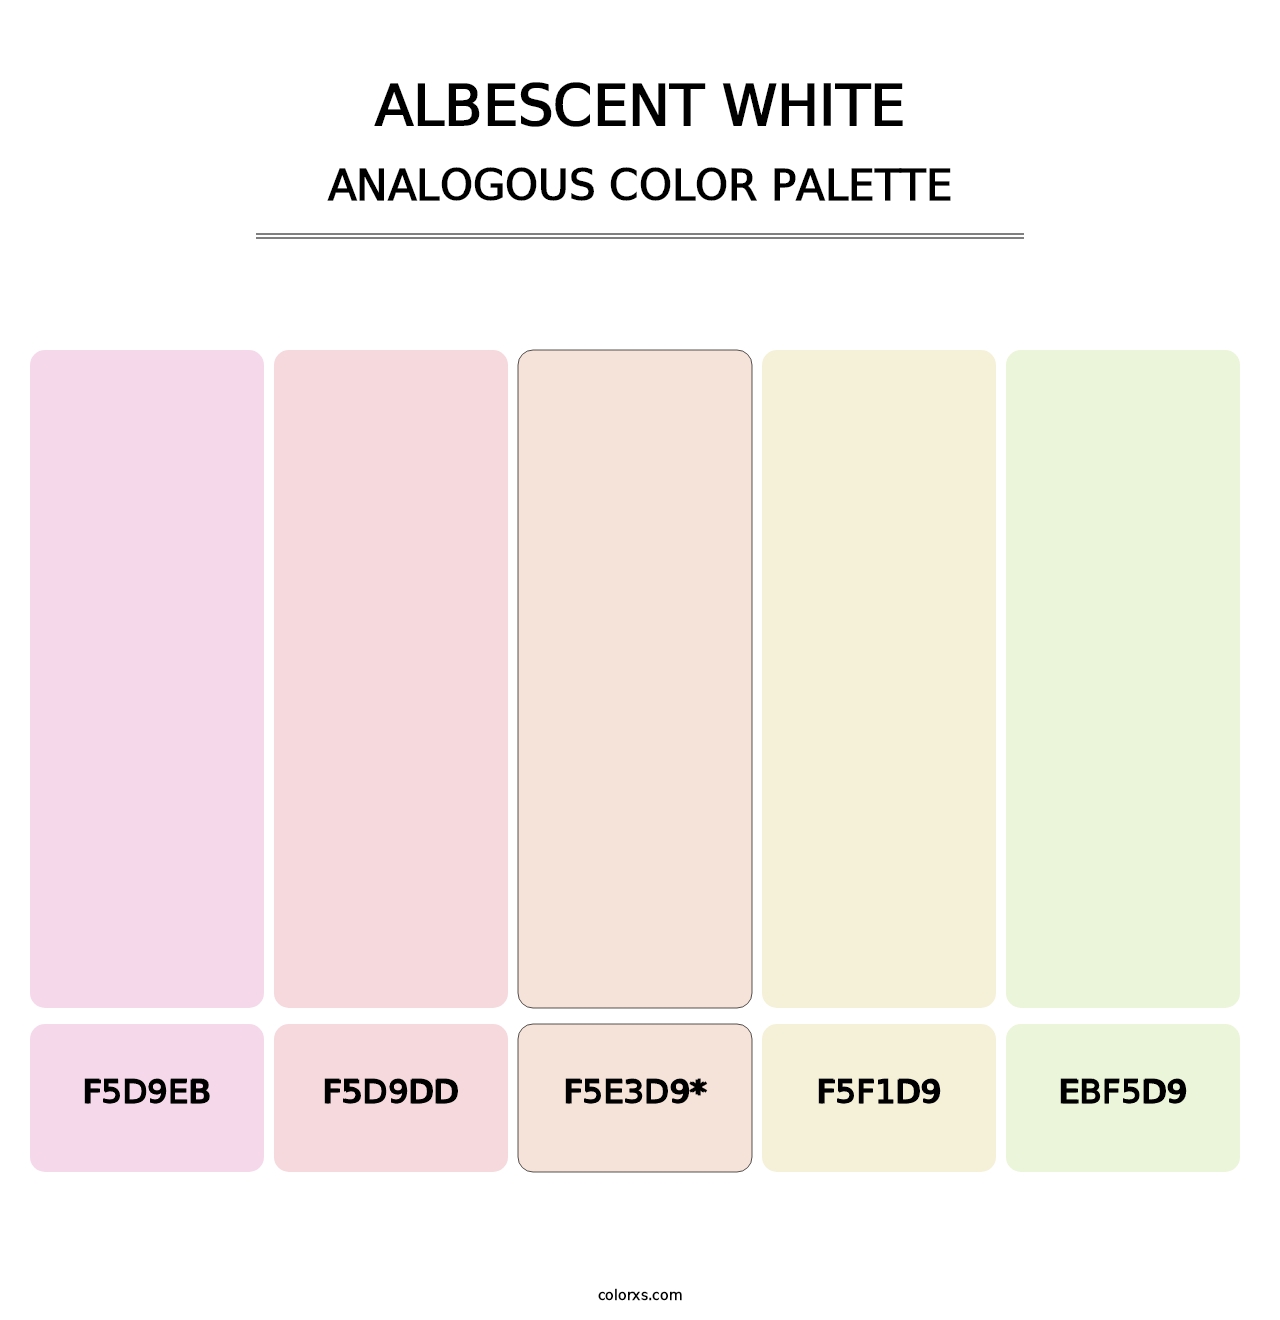 Albescent White - Analogous Color Palette